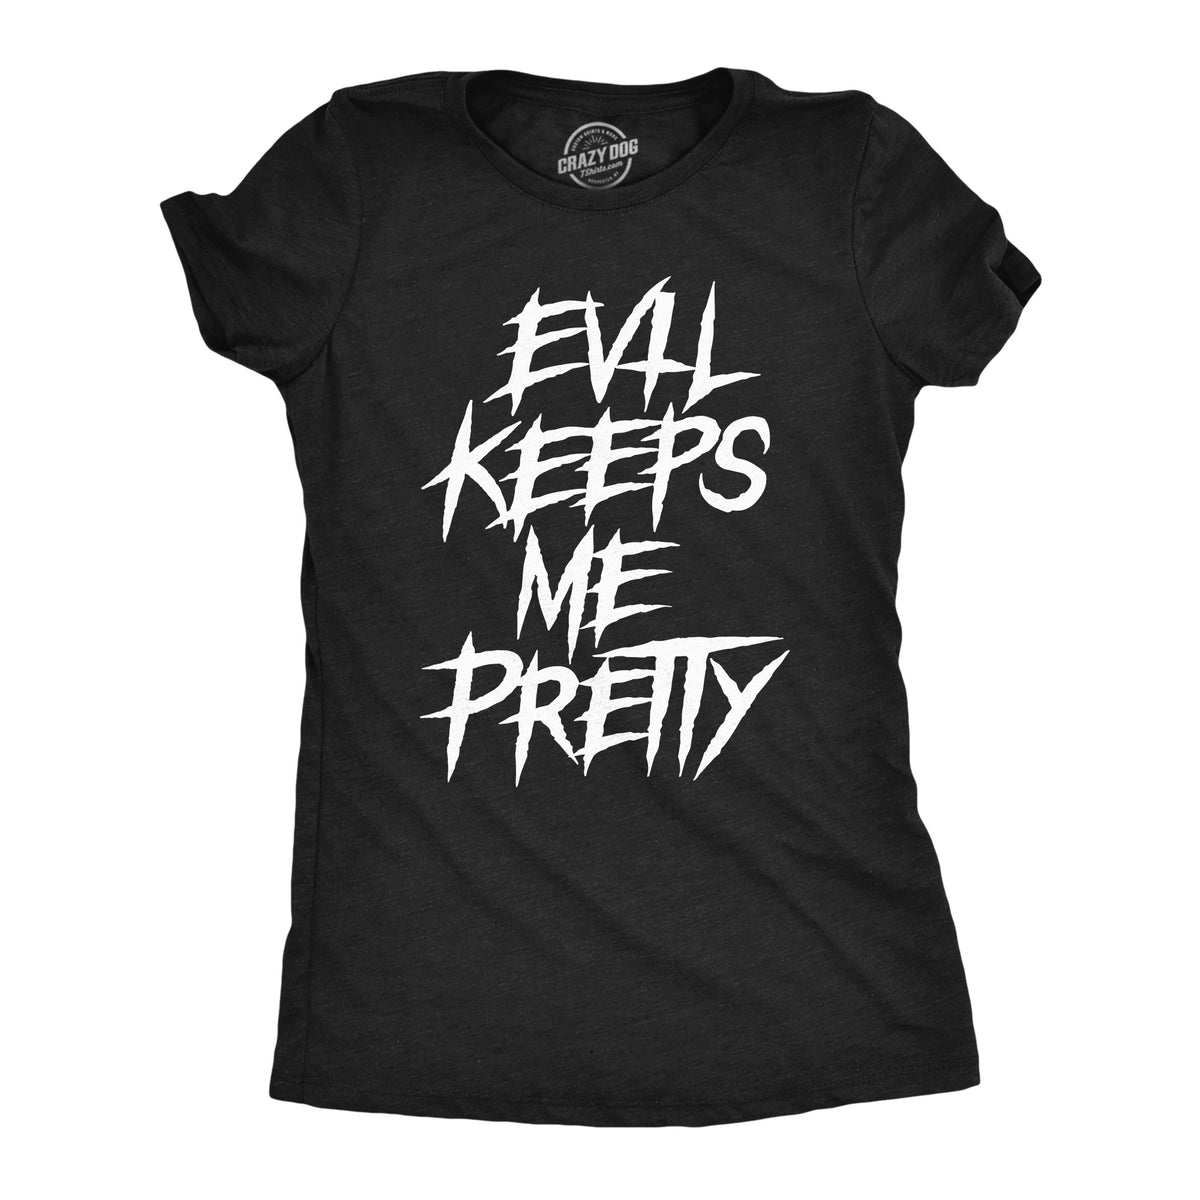 Funny Heather Black - EVIL Evil Keeps Me Pretty Womens T Shirt Nerdy Halloween sarcastic Tee